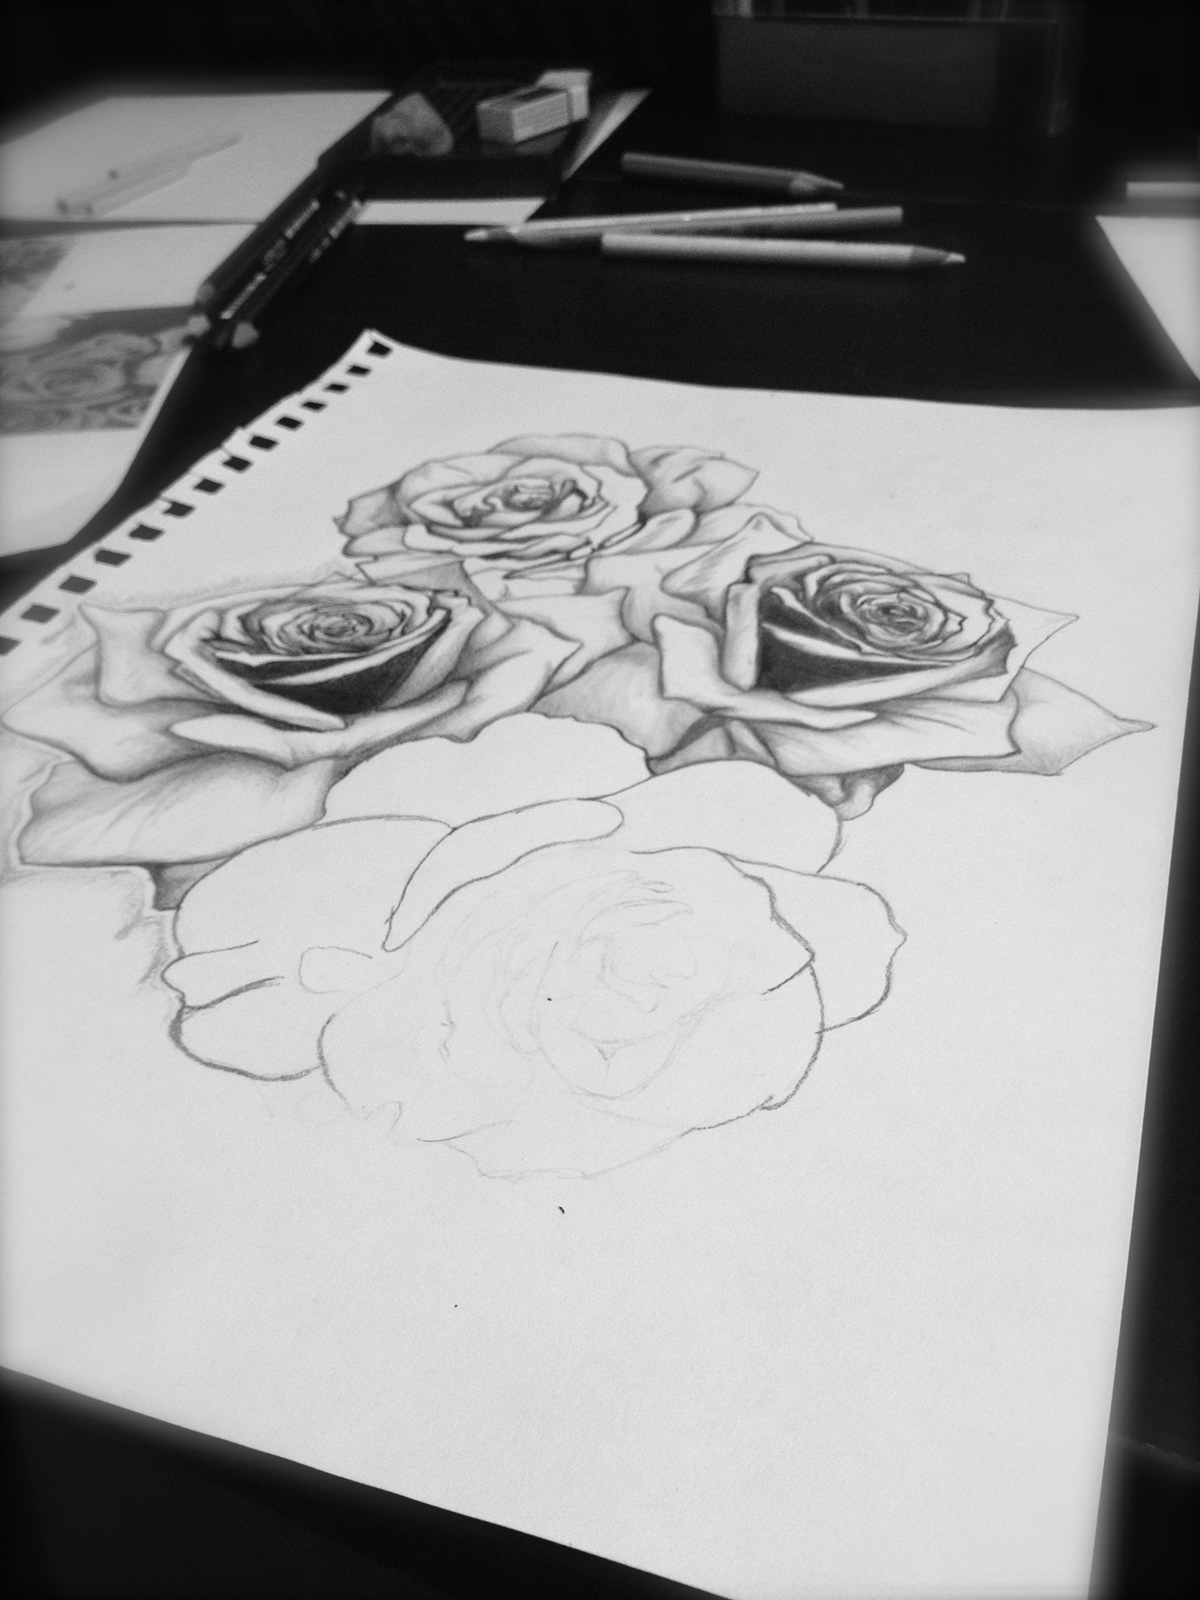 Roses sketch rose tattoo shading pencil graphite